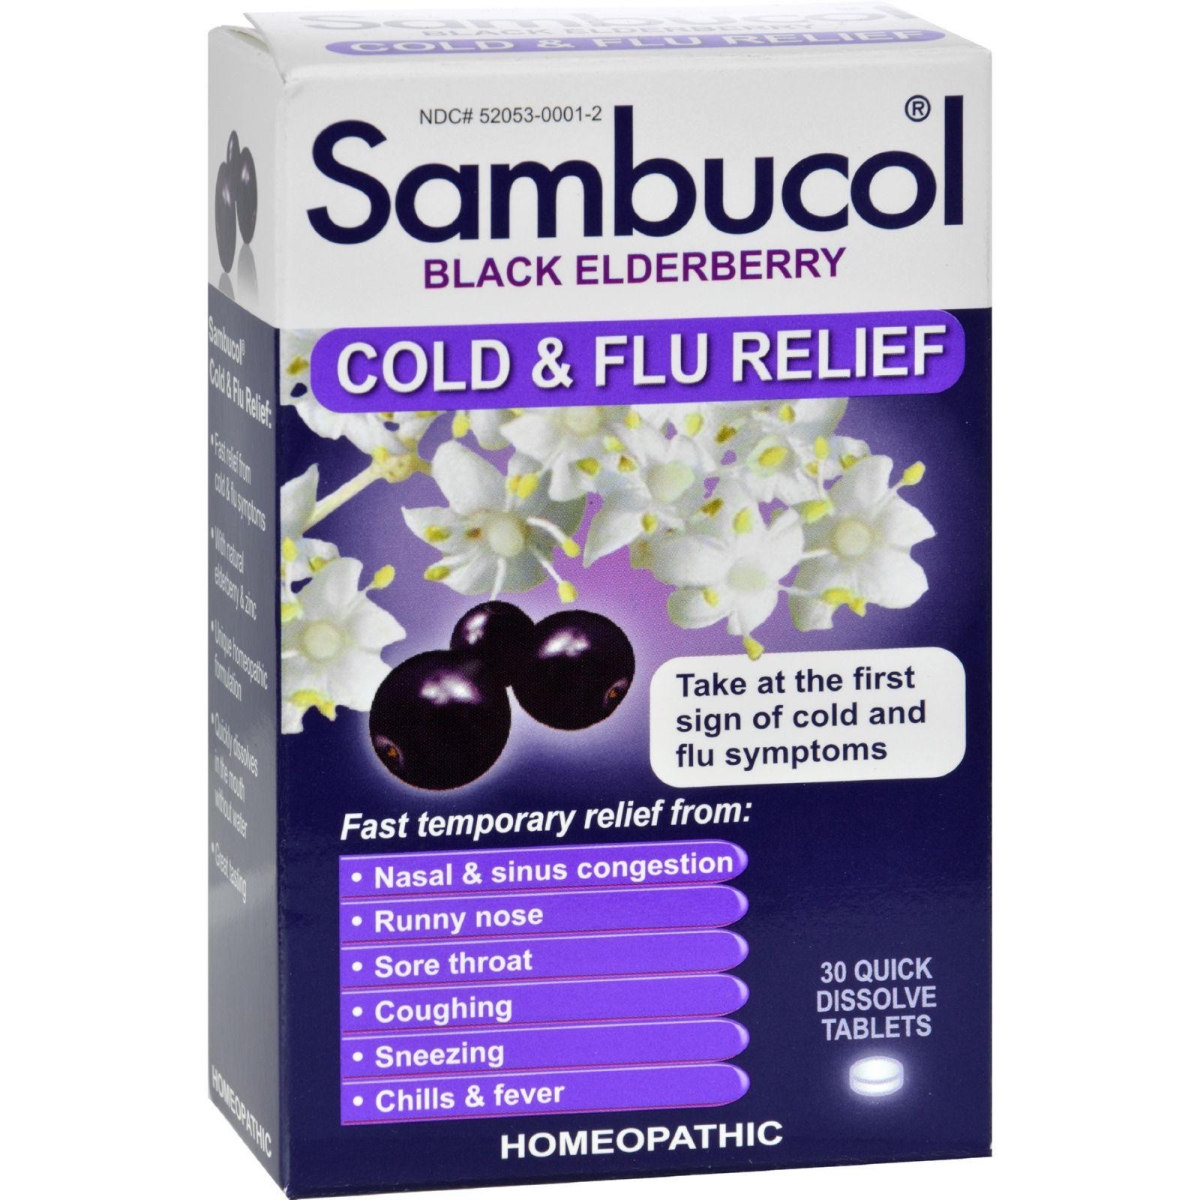 Hg0597427 Black Elderberry Cold & Flu Relief - 30 Lozenges